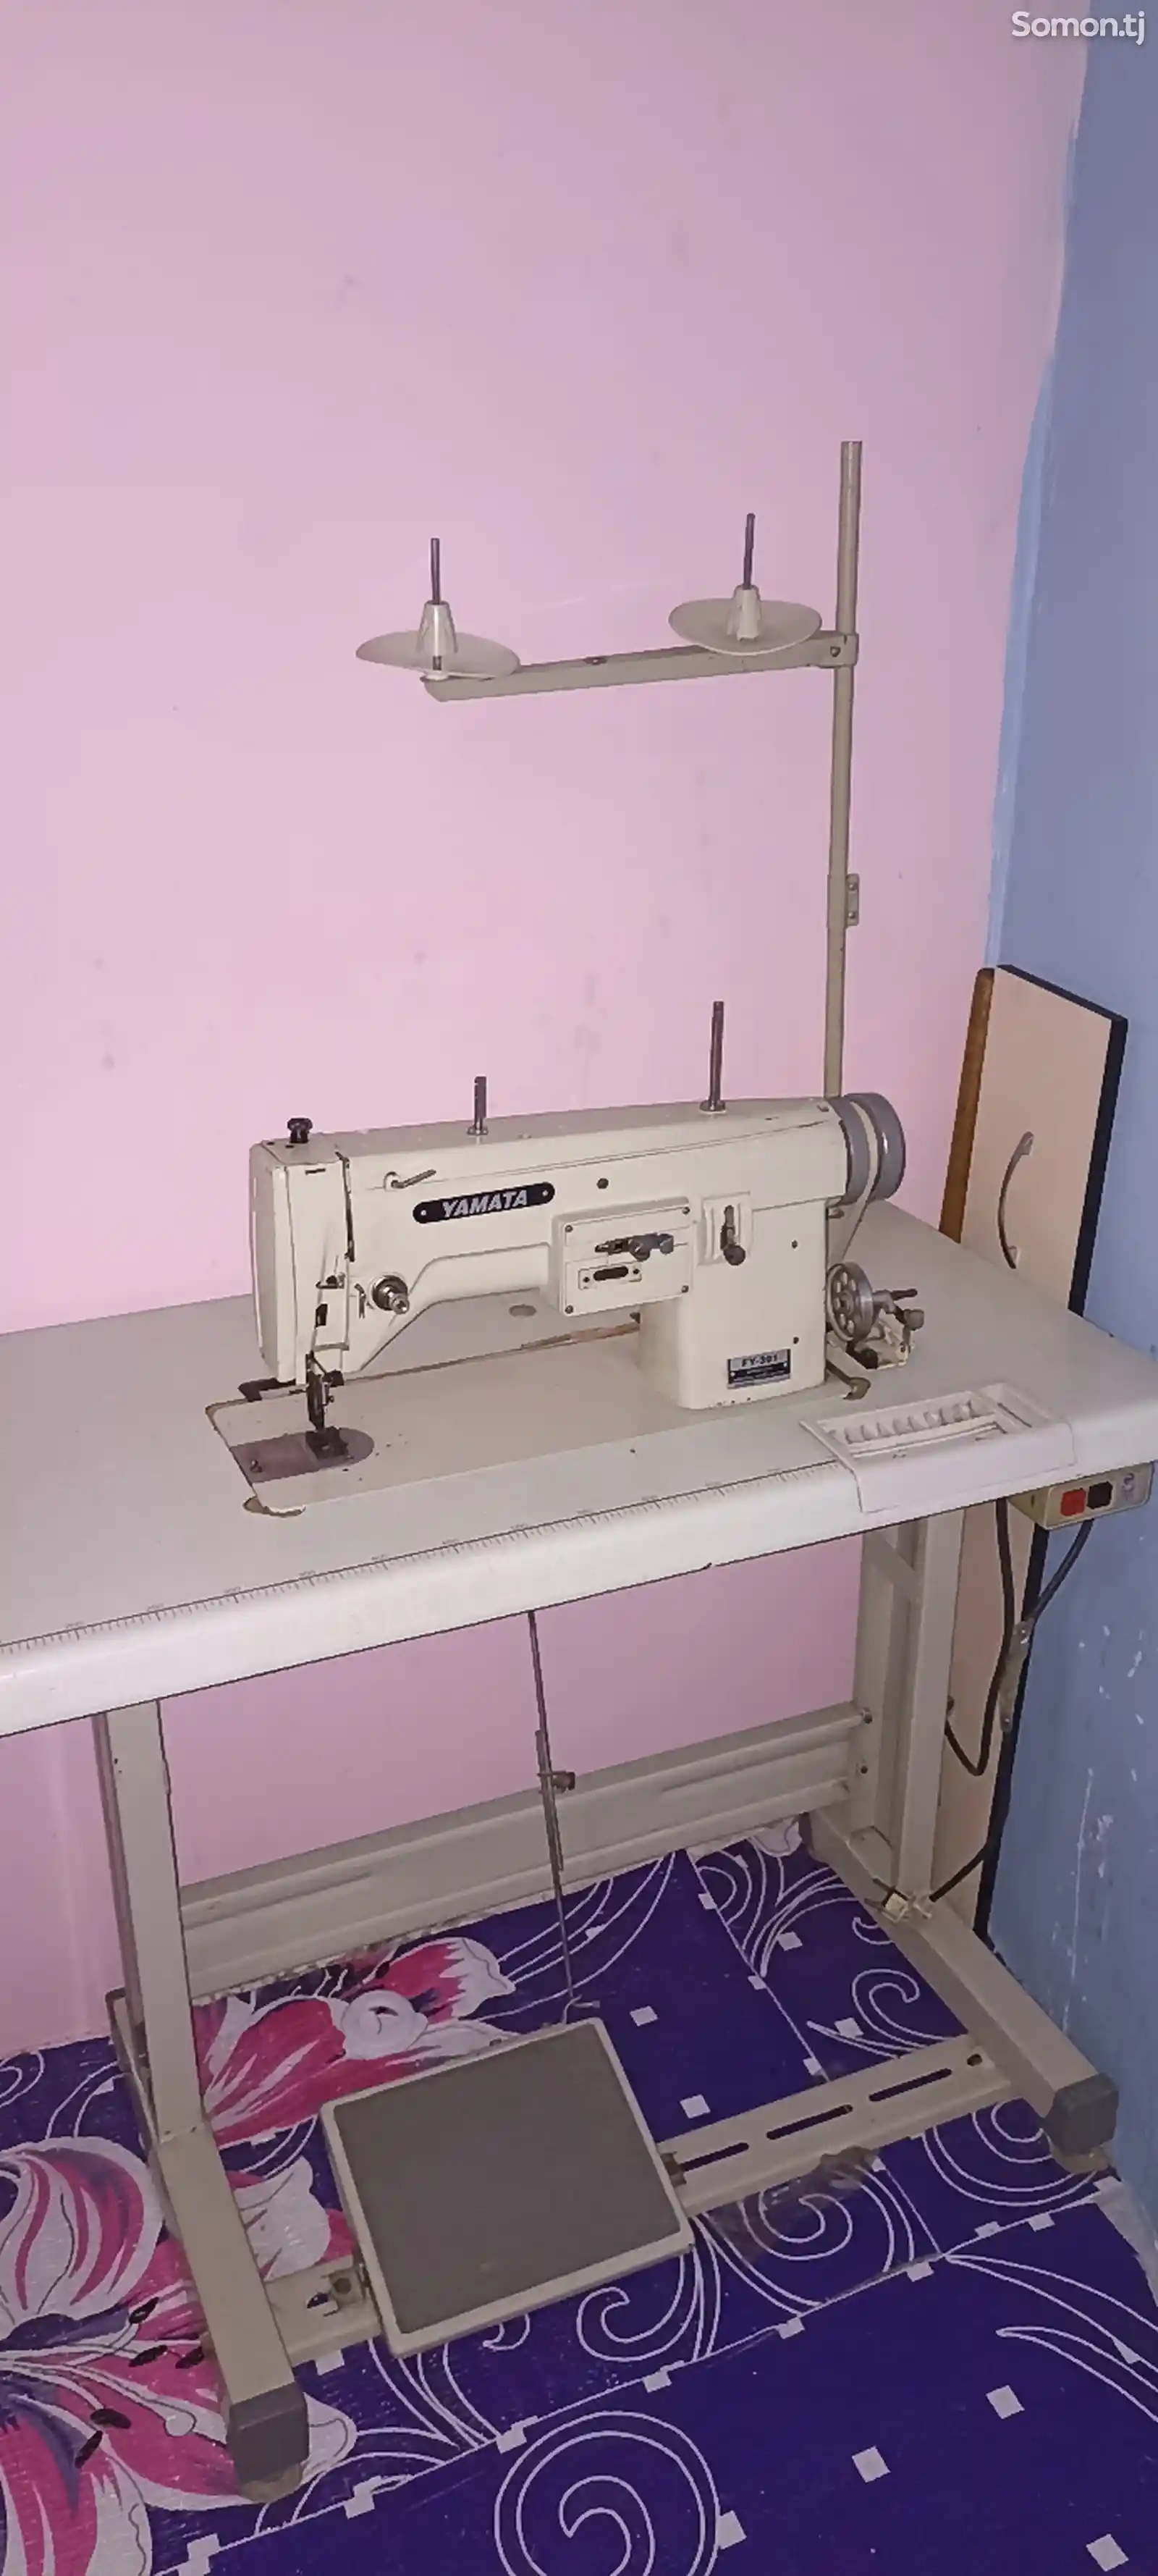 Швейная машина Yamata-4